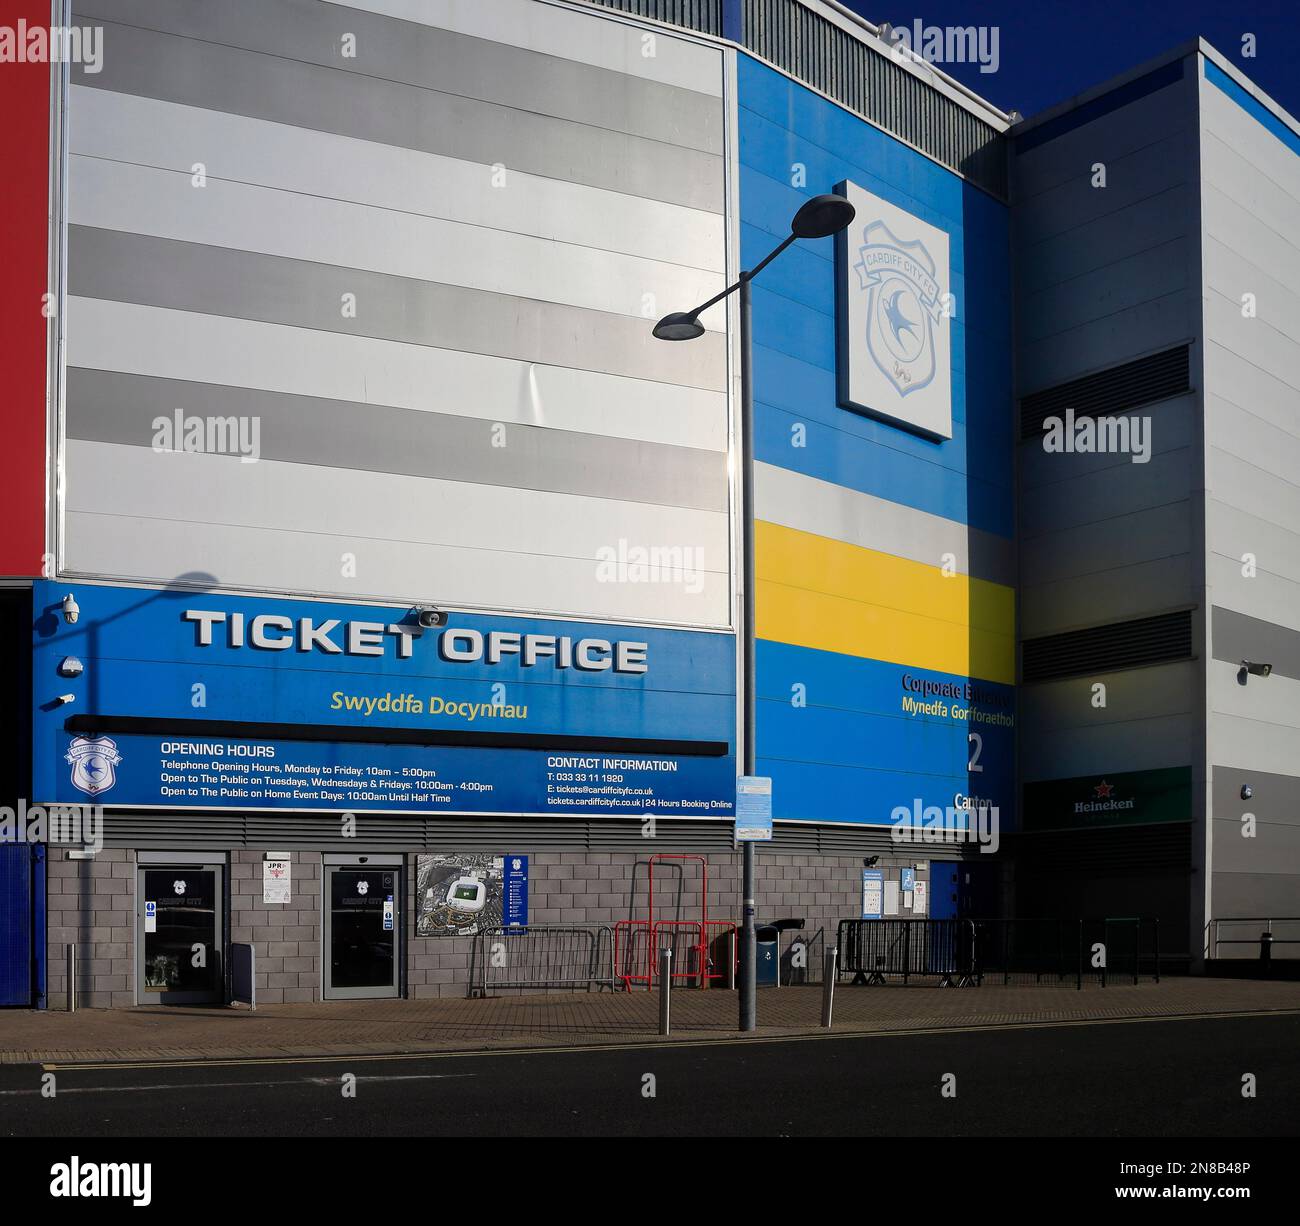 Cardiff City – The Football League Store